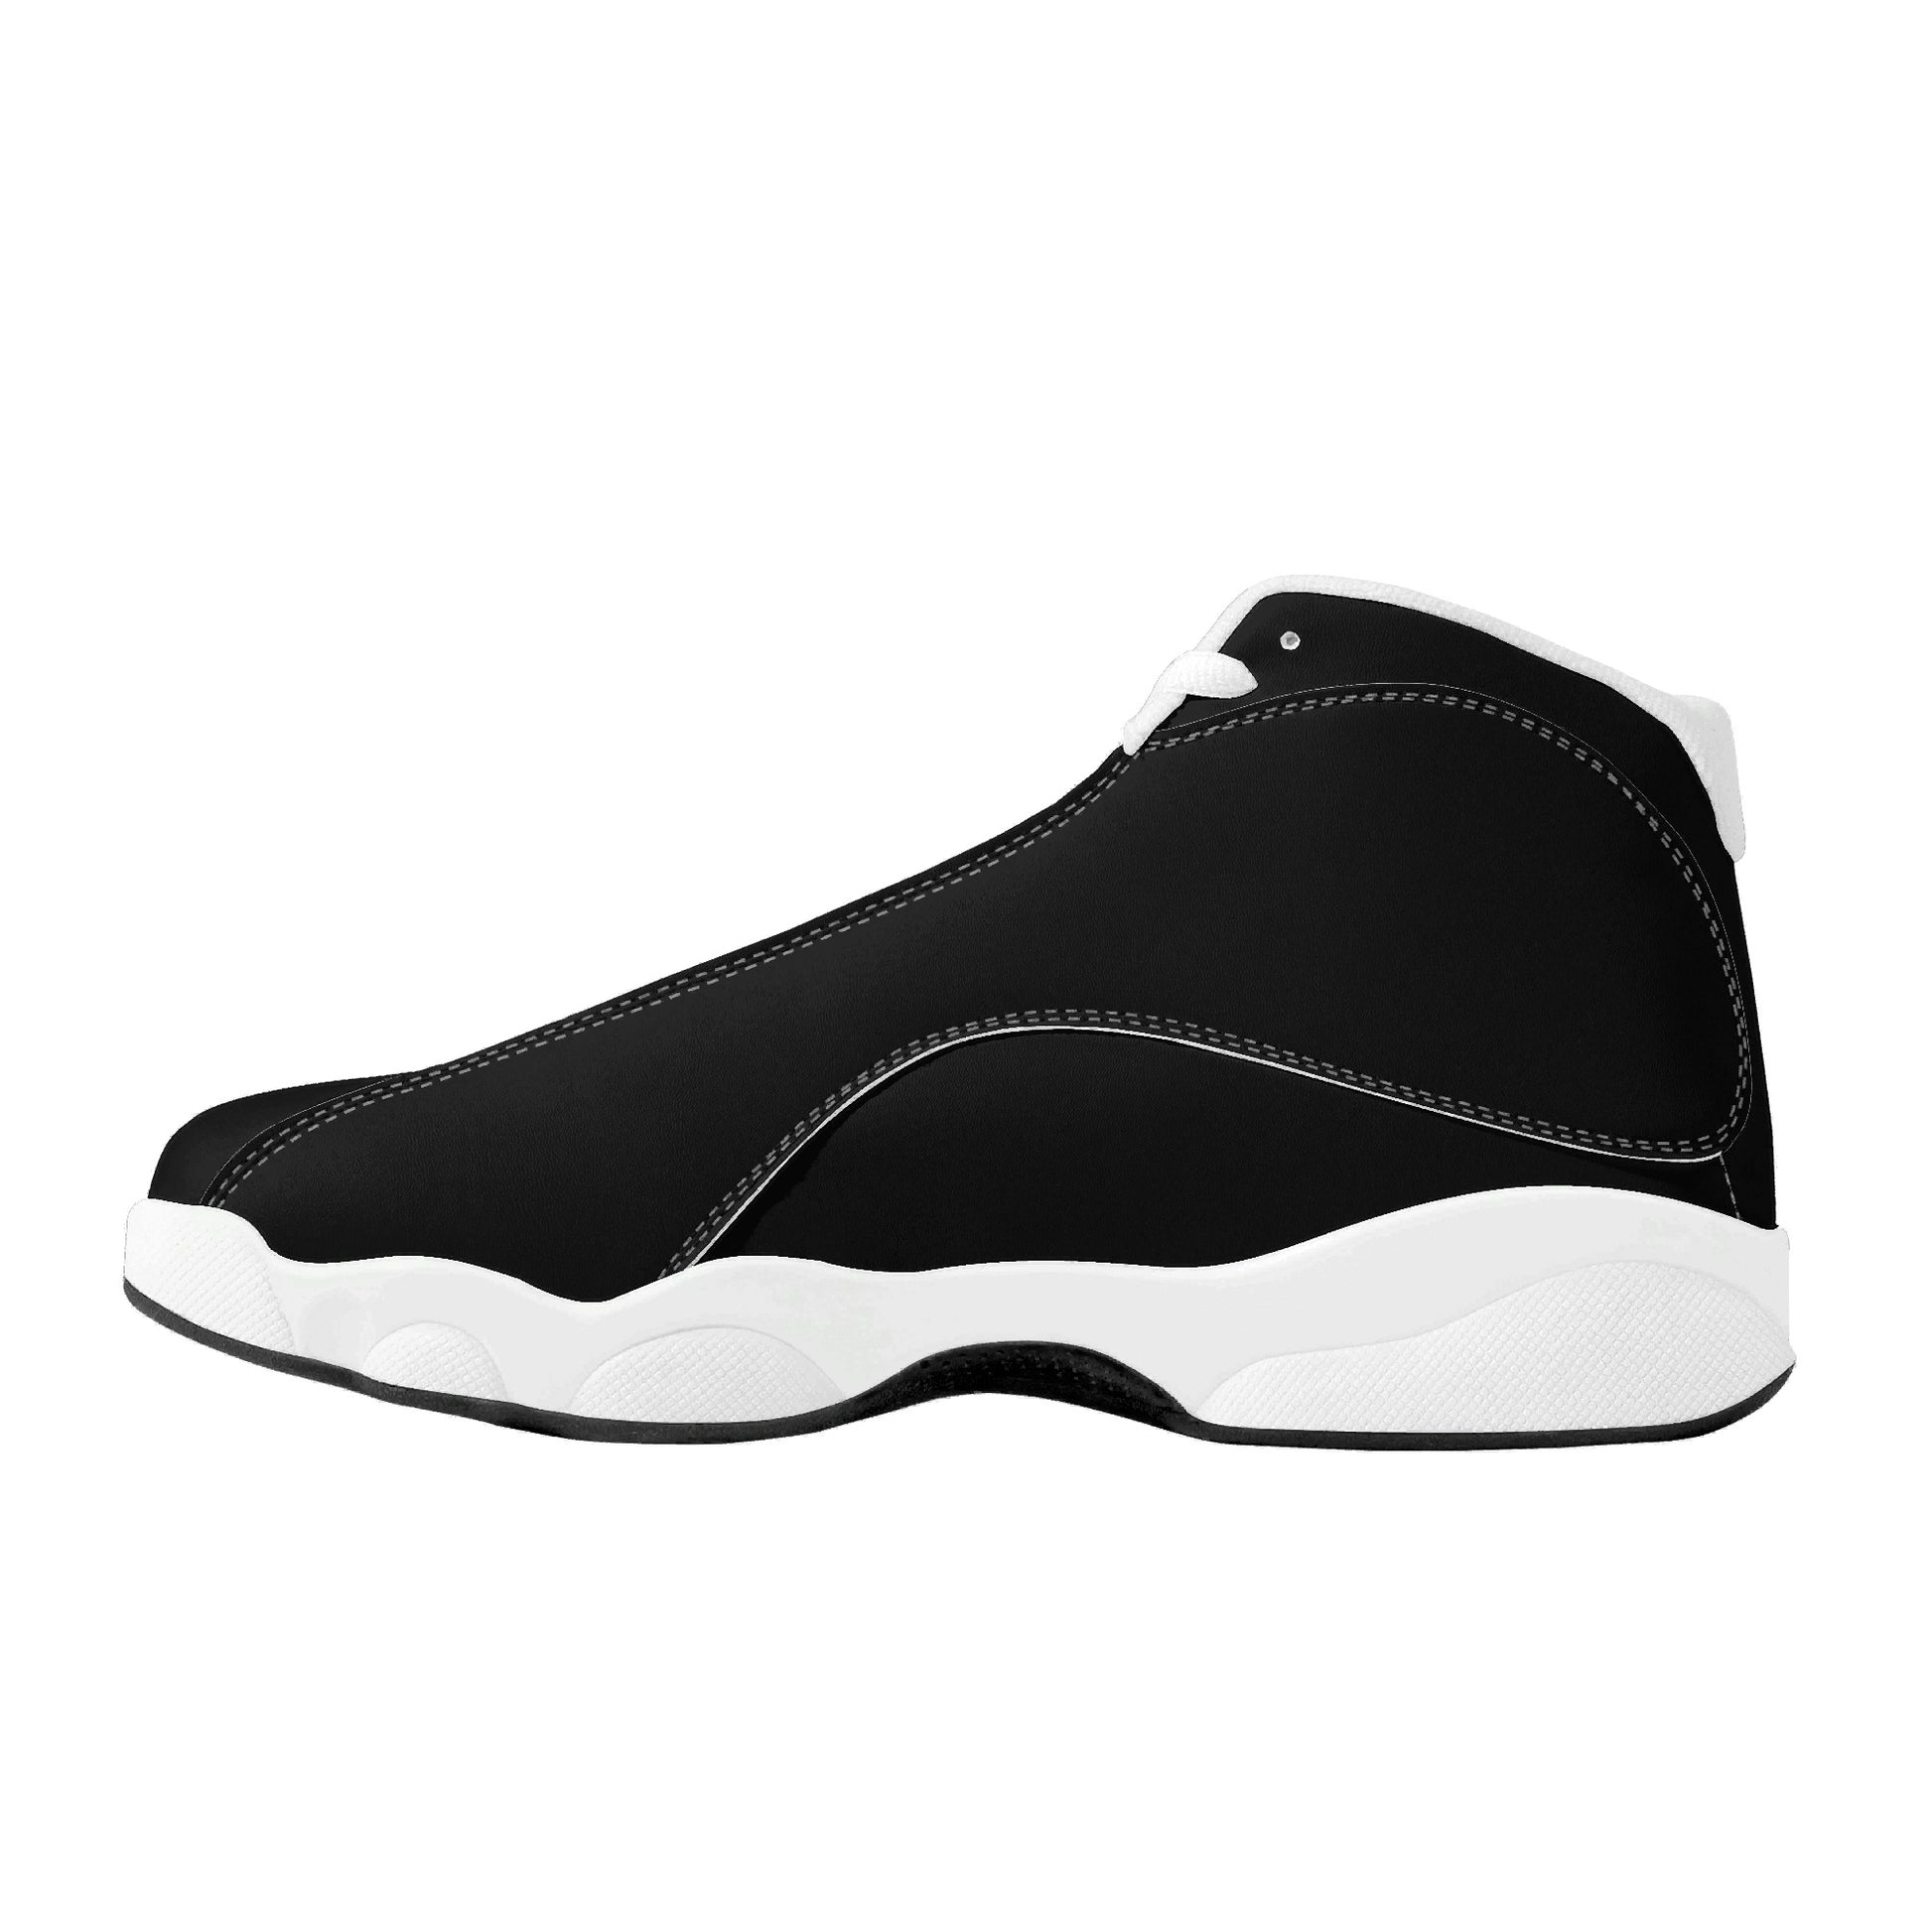 fz men's basketball shoes